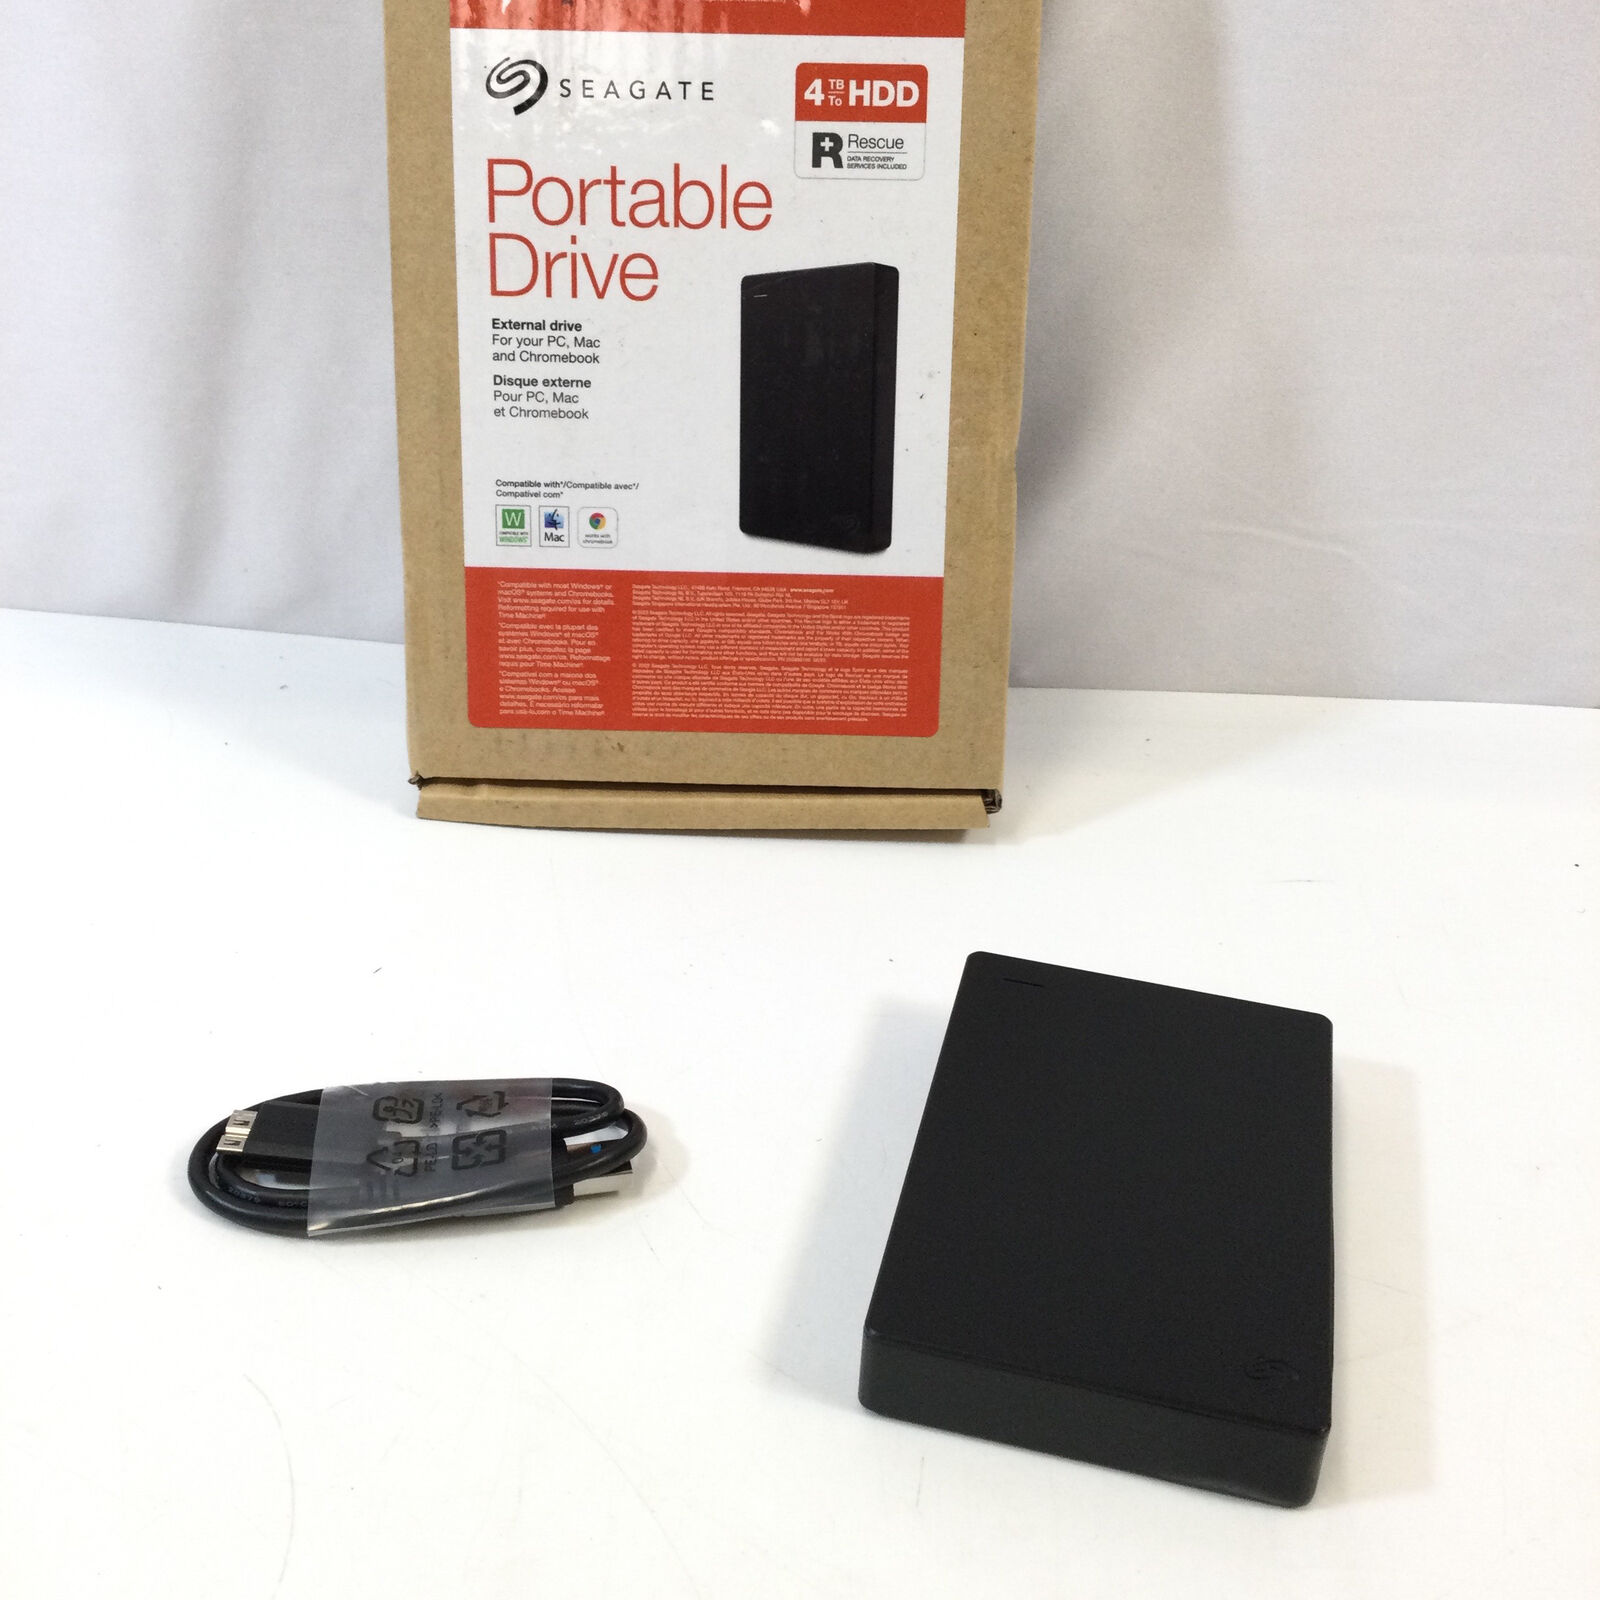 Seagate SRD0NF1 Black STX External Portable 4TB Hard Drive For PC Mac Chromebook